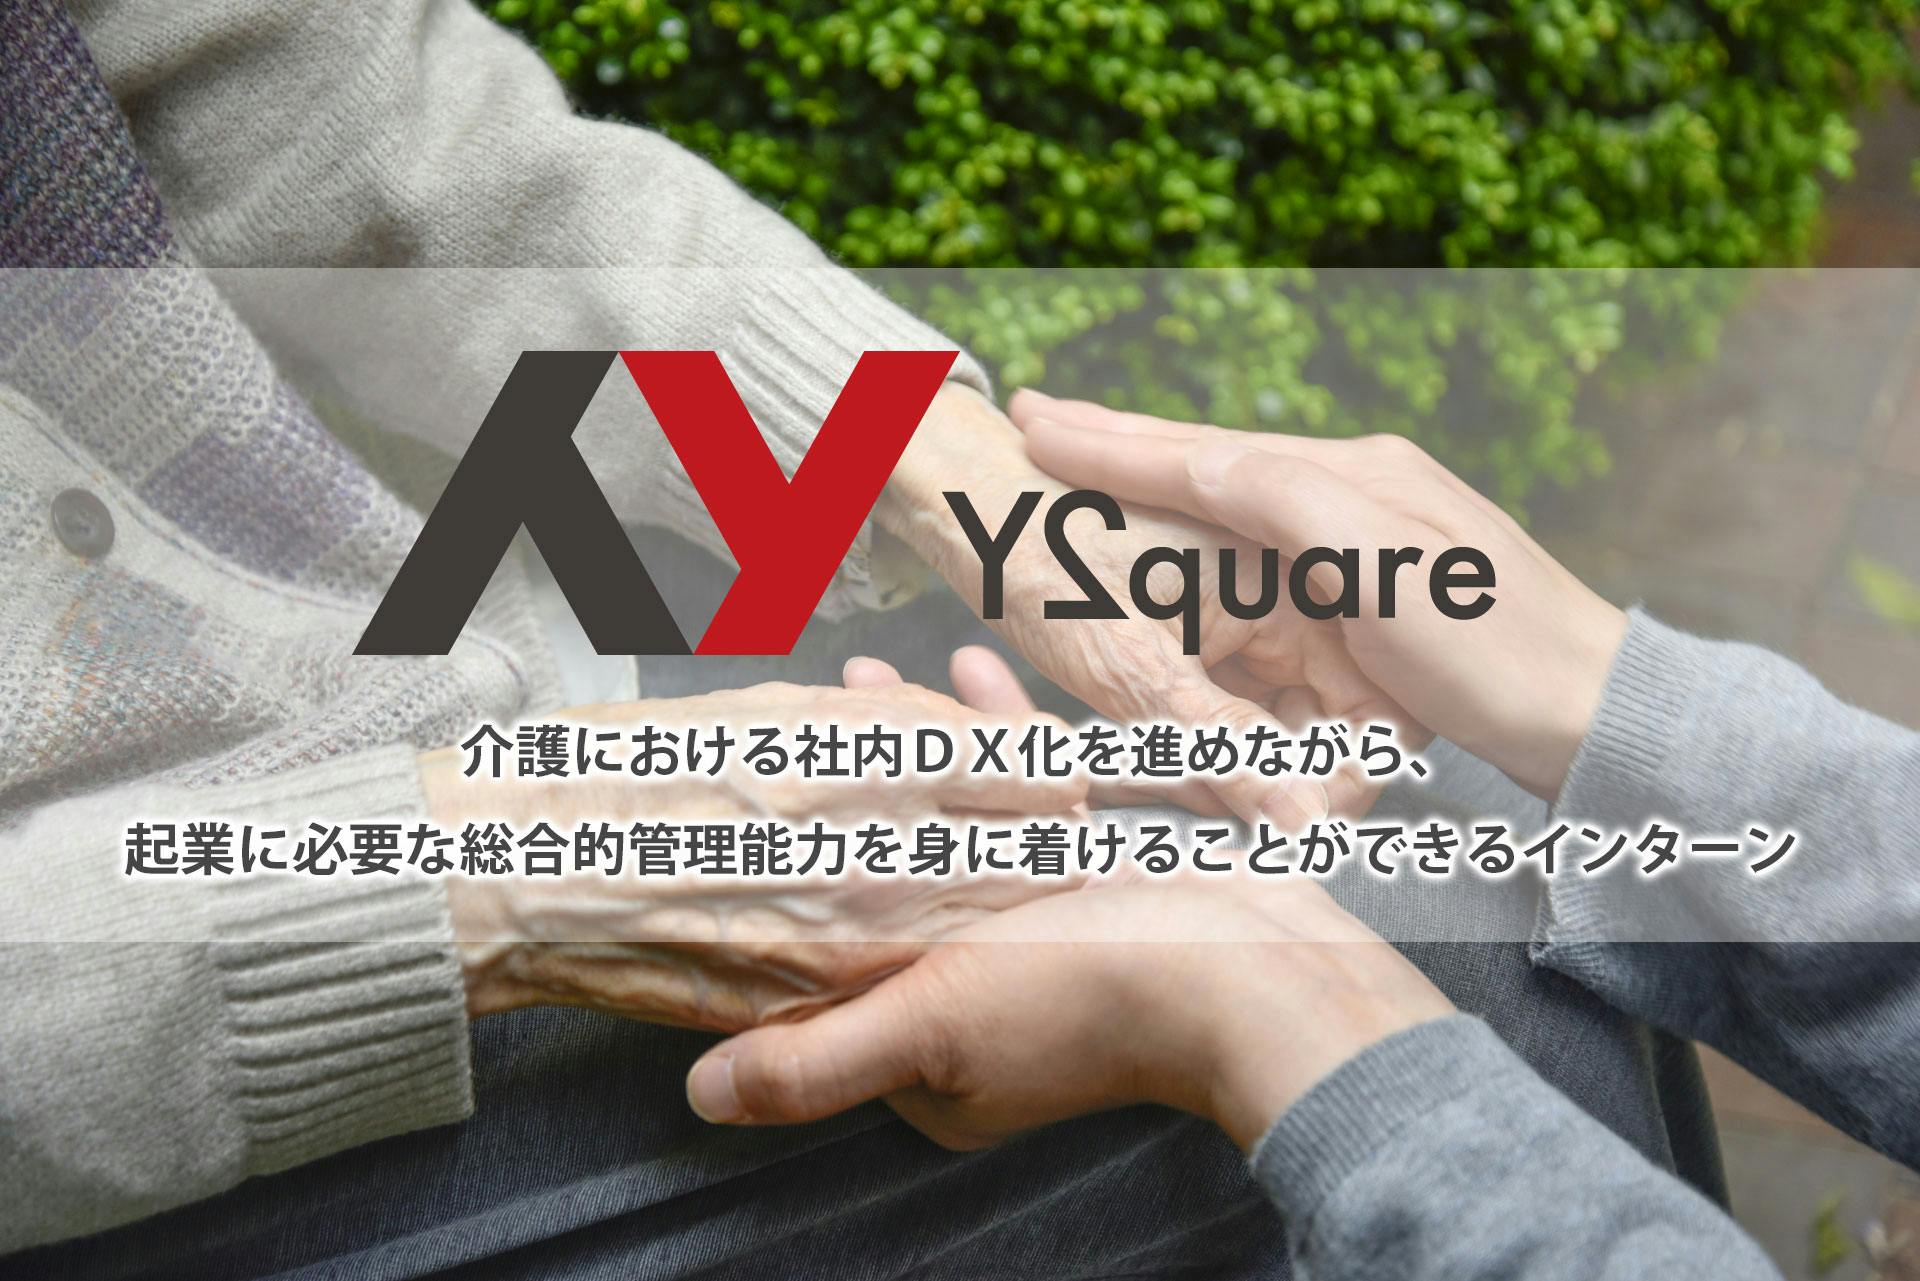 y2quare株式会社のメイン画像